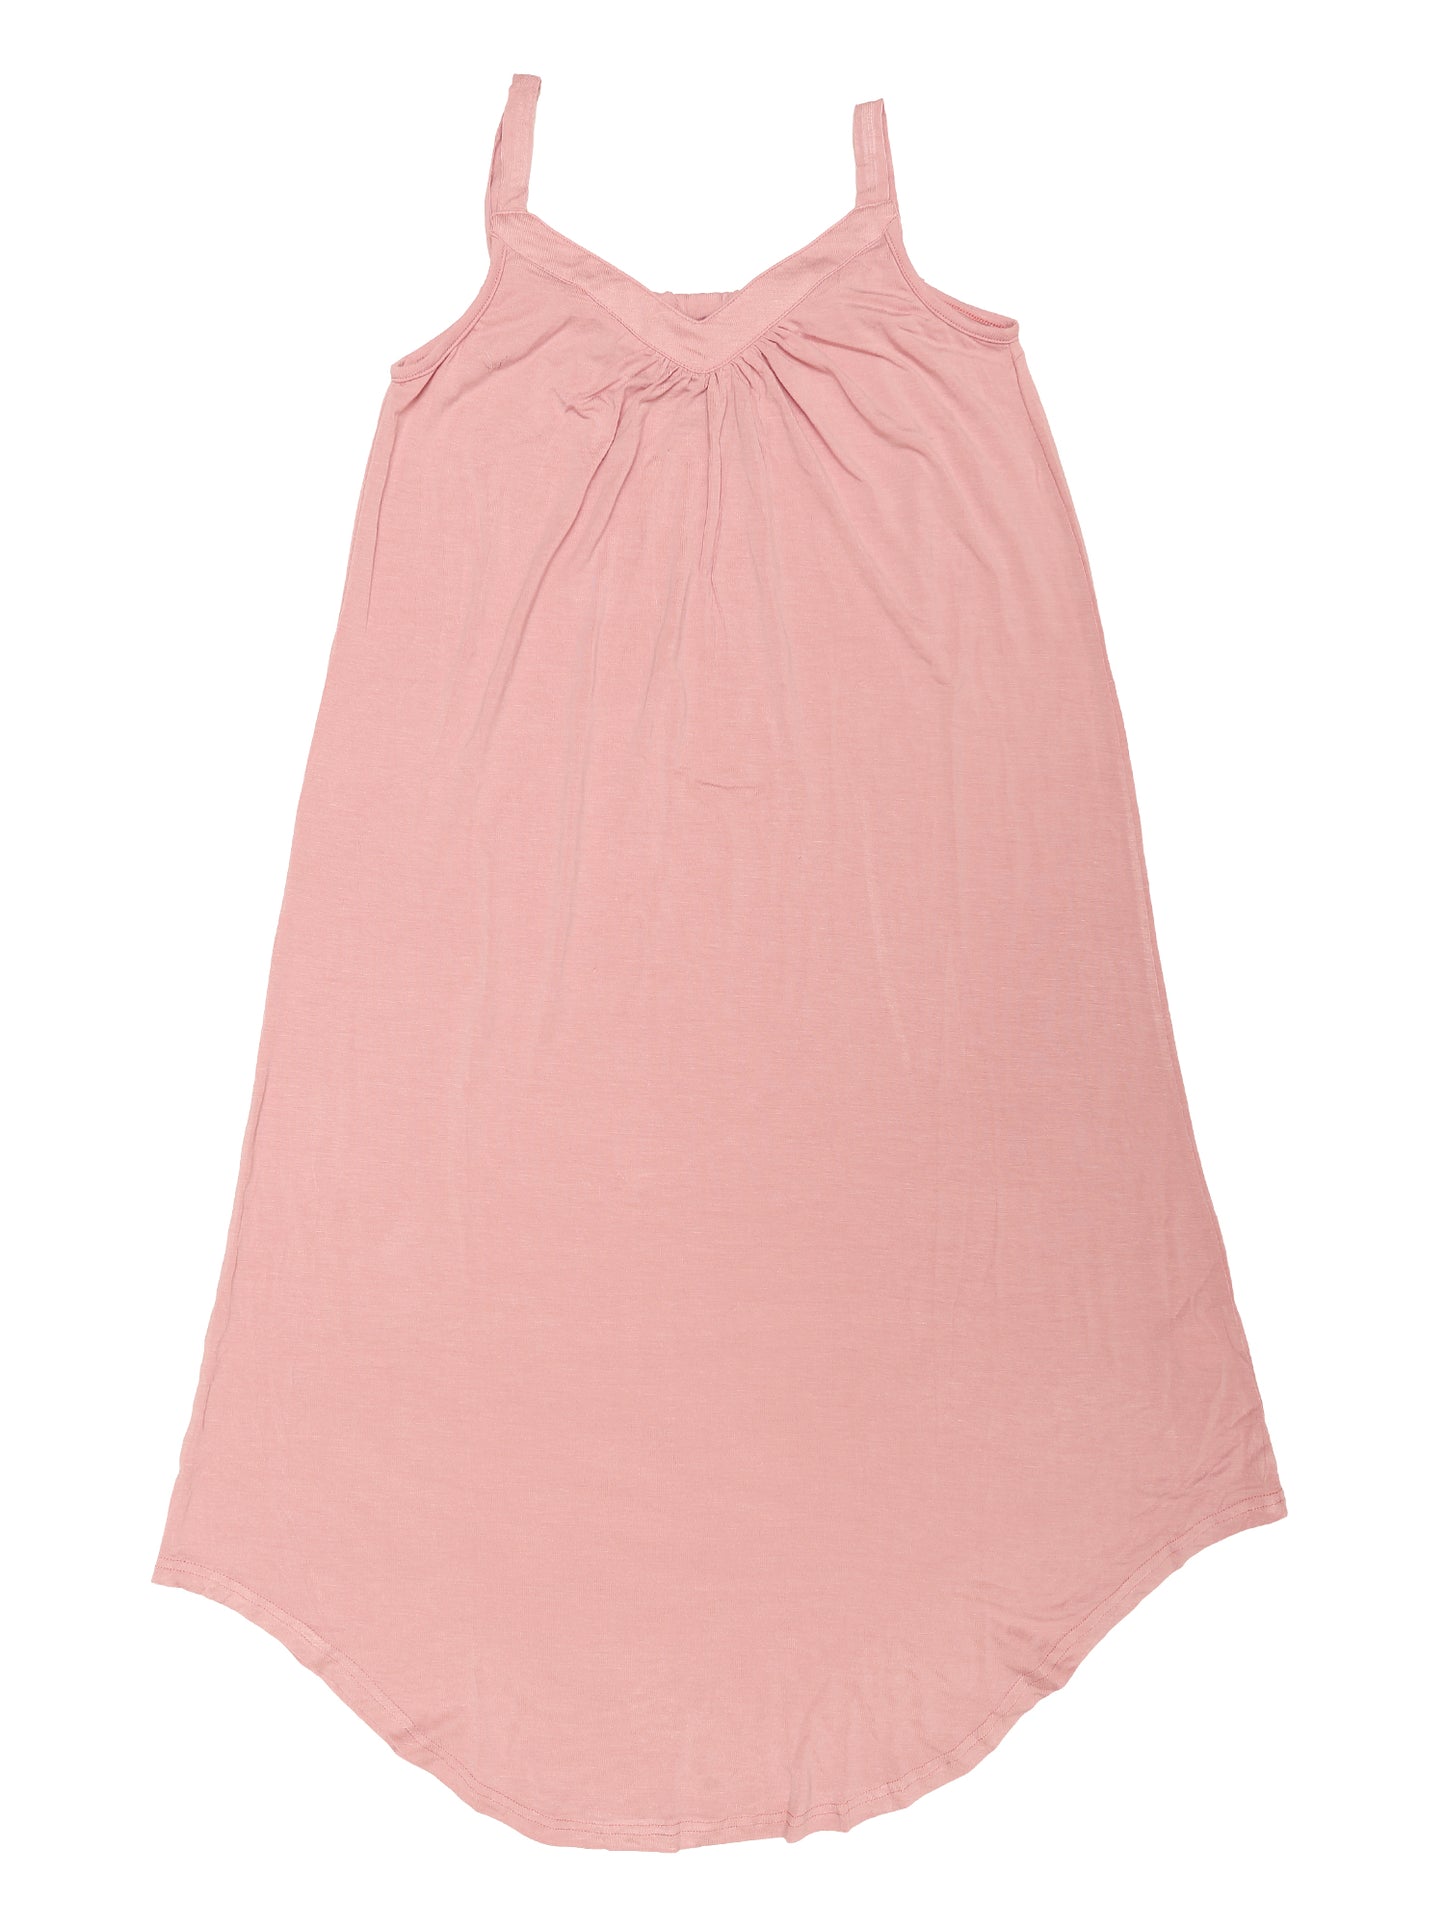 cheibear Pajama V Neck Nightdress Stretchy Lounge Cami Dress Pink